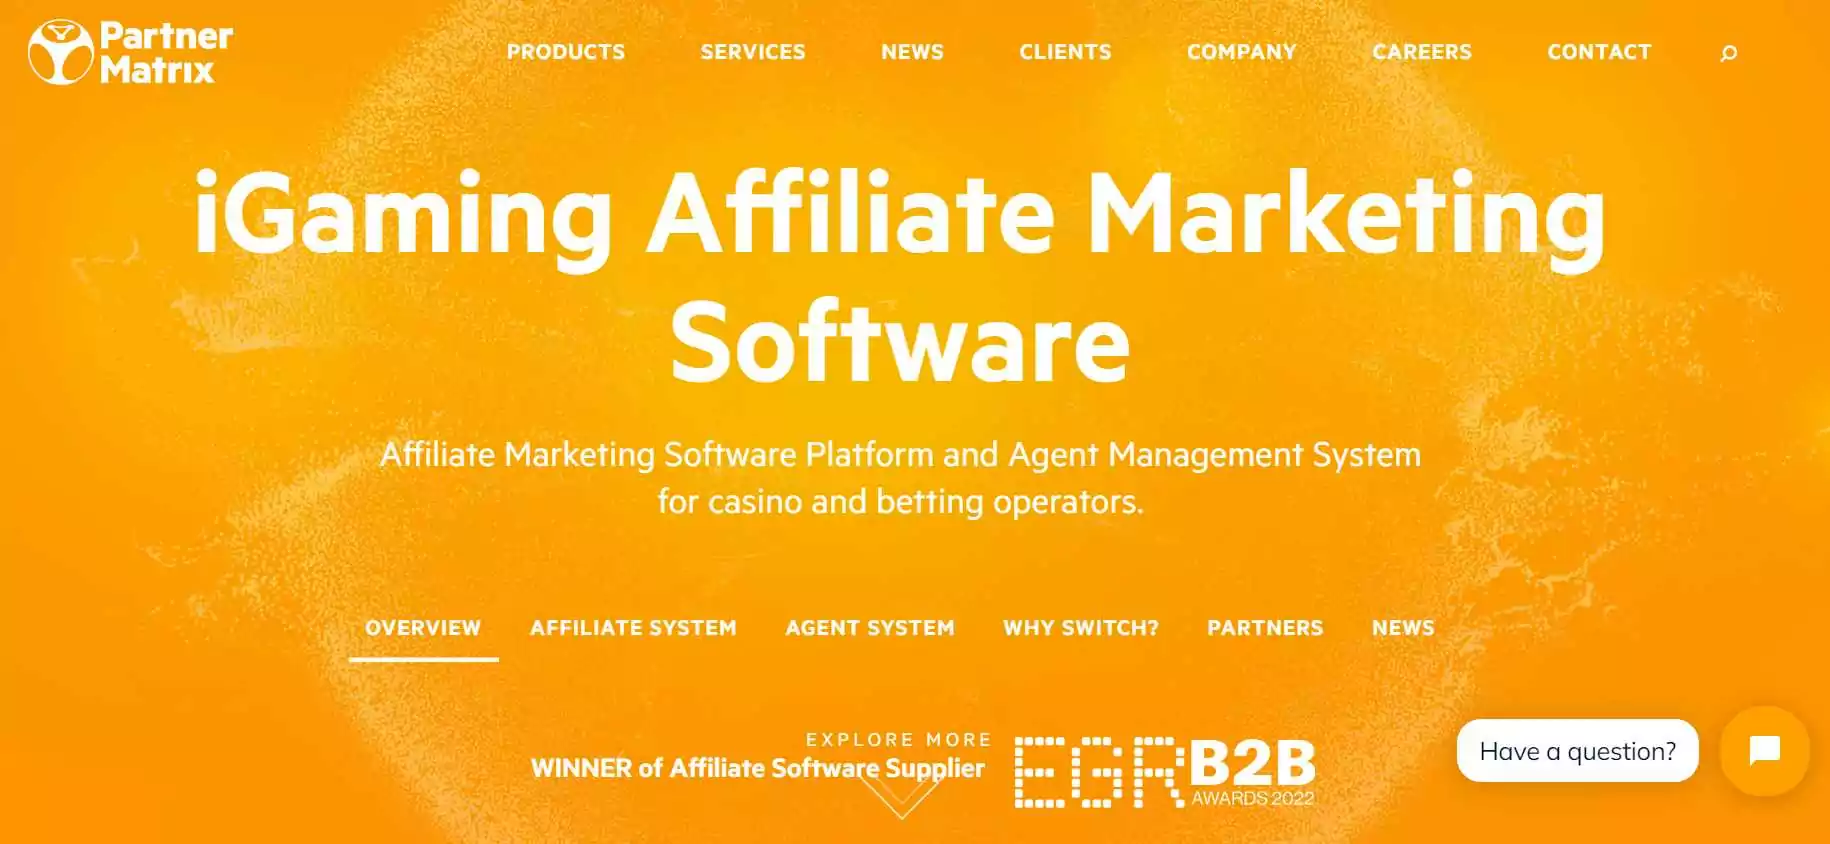 igaming-afiliat-marketing-software